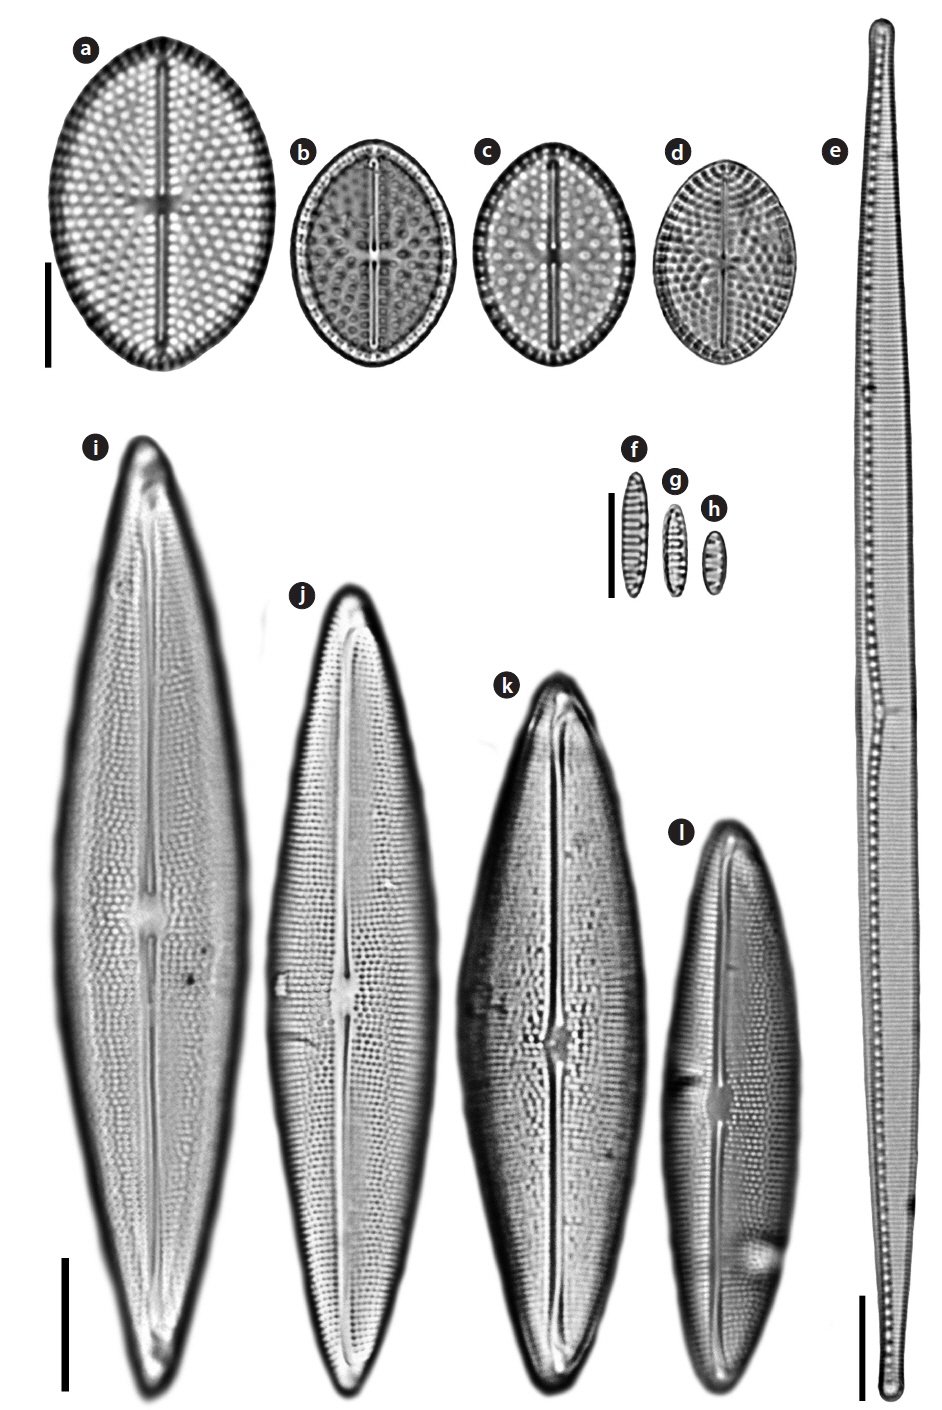 Light microscopy (LM) microphotographs. (a-d) Cocconeiopsis wrightii, (e) Nitzschia improvisa, (f-h) Nitzschia valdestriata, and (i-l) Parlibellus hamulifer. Scale bars, 10 μm.